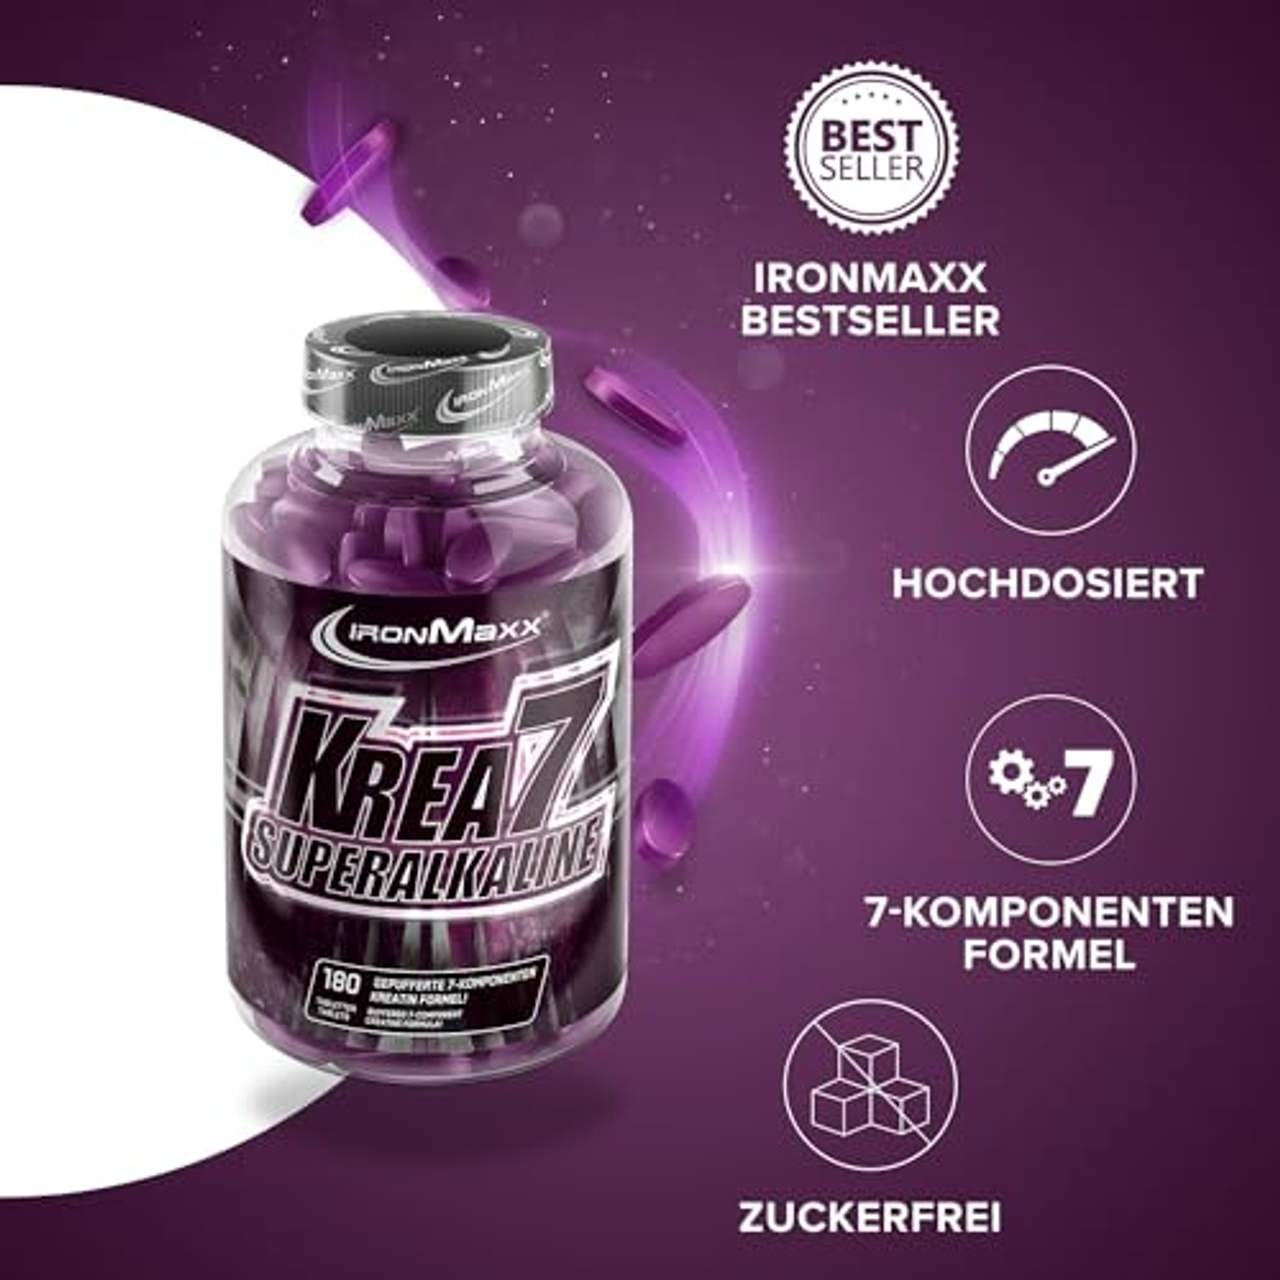 IronMaxx Krea7 Superalkaline 180 Tabletten